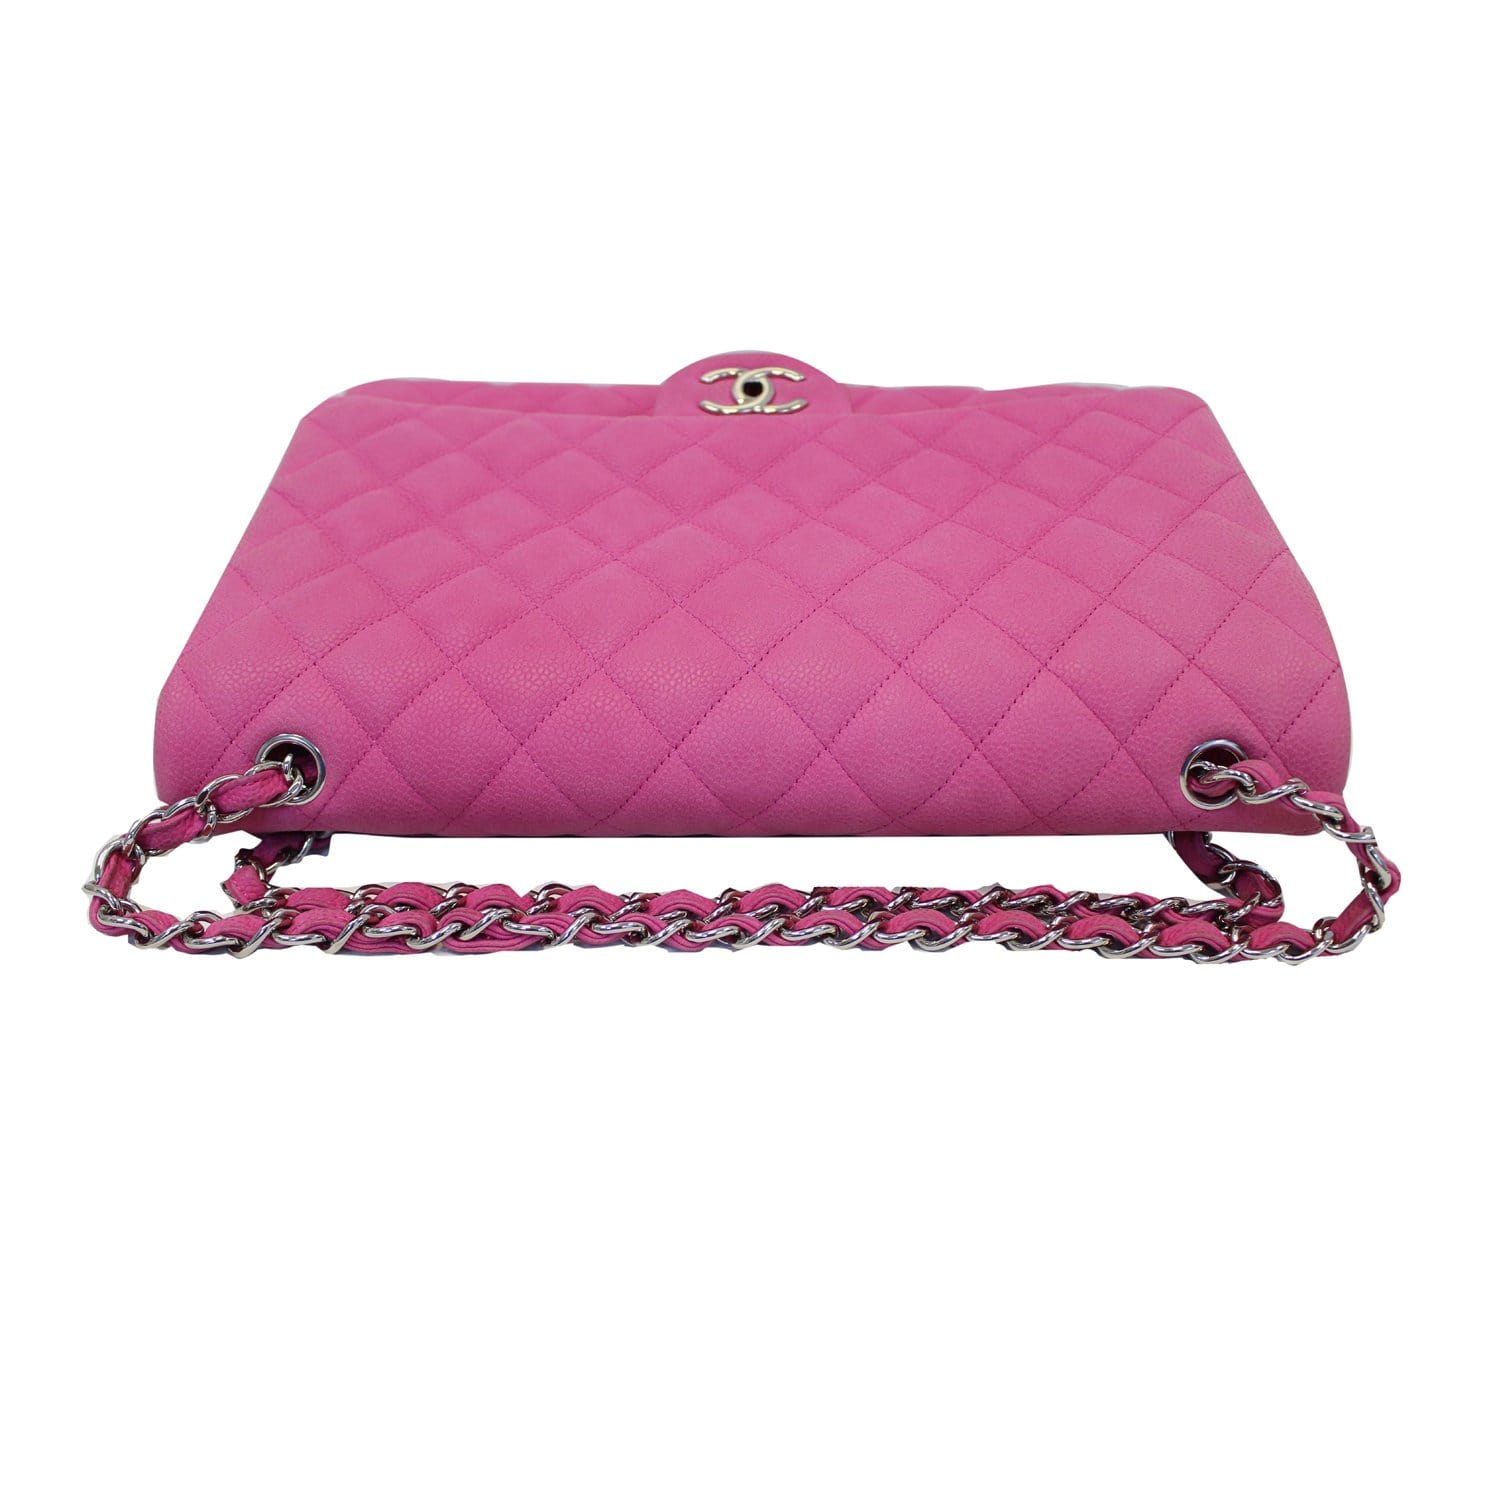 Pink Chanel Bag..  Pink chanel bag, Pink chanel, Chanel bag